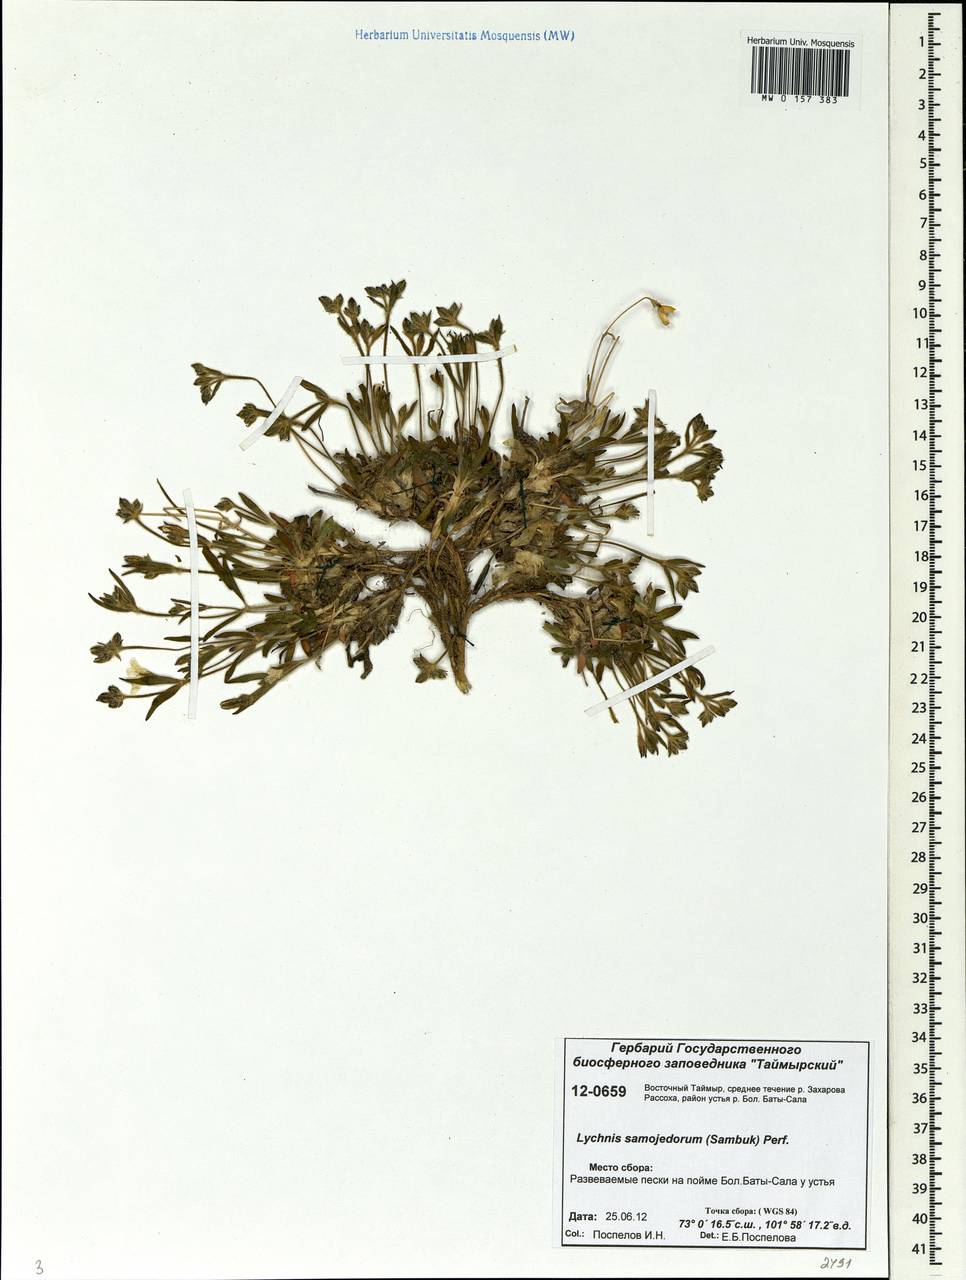 Silene samojedorum (Sambuk) Oxelman, Siberia, Central Siberia (S3) (Russia)